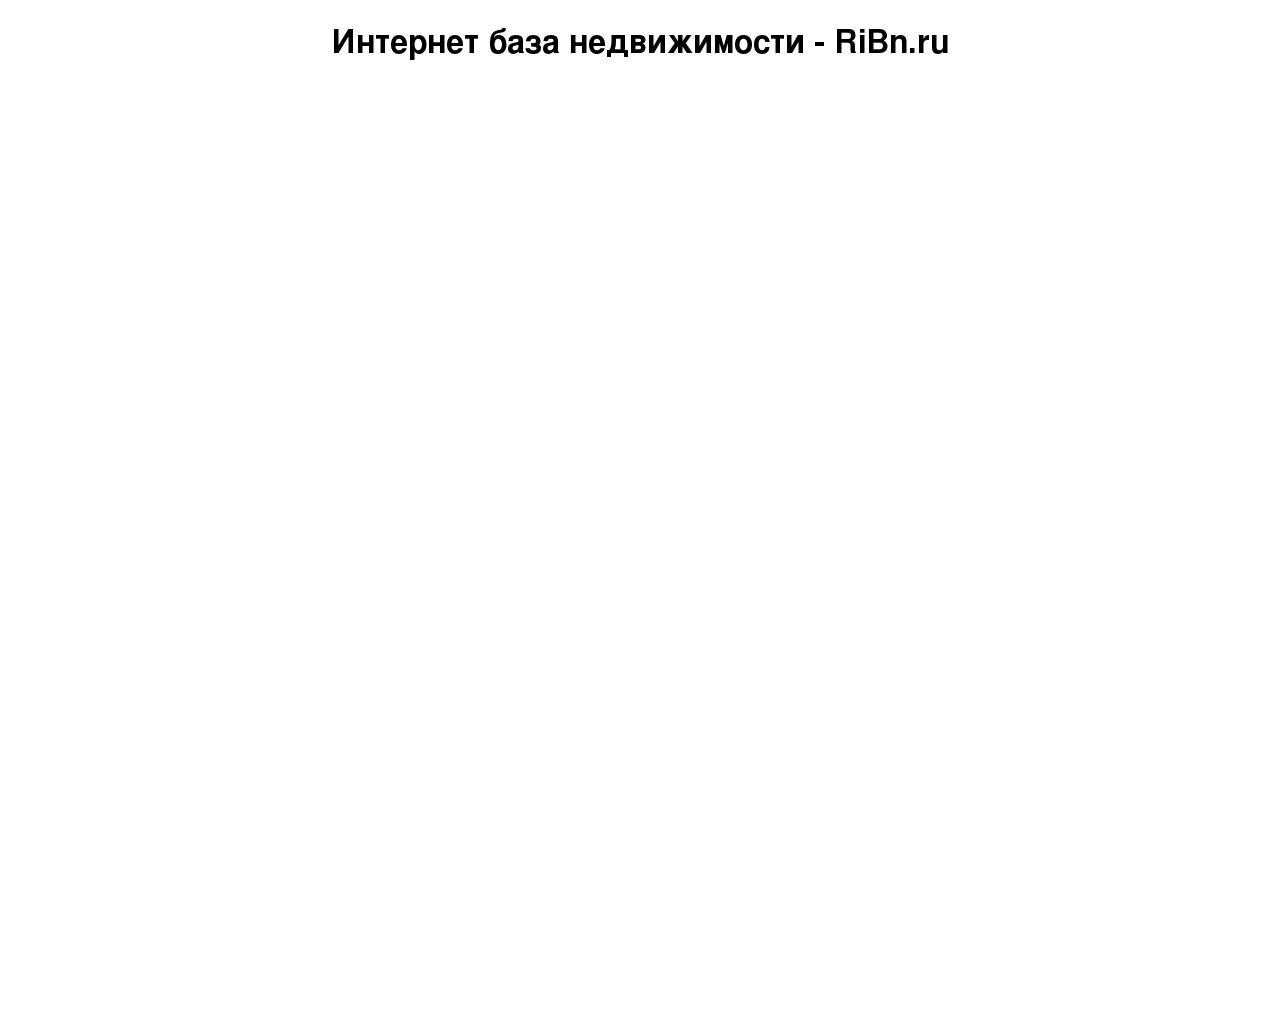 Изображение сайта ribn.ru в разрешении 1280x1024